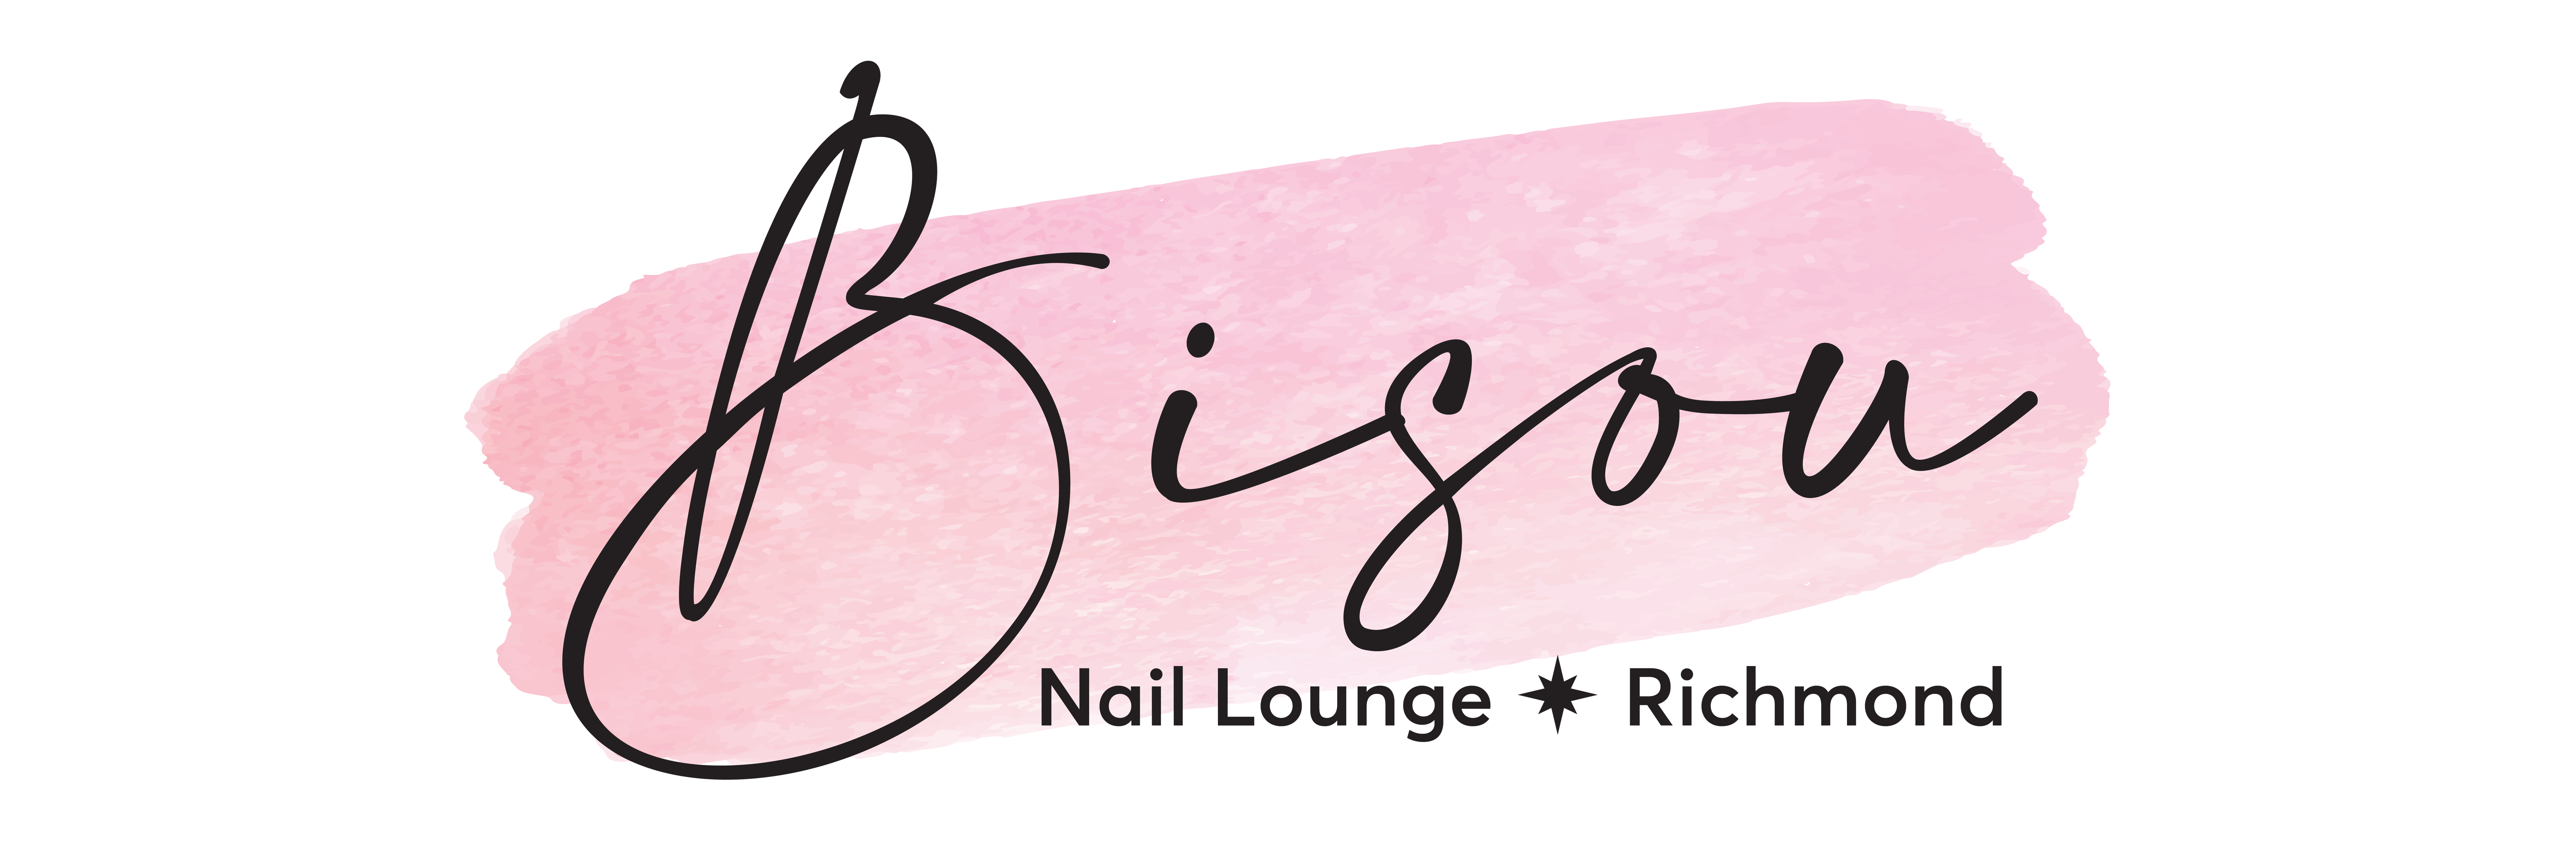 Bisou Nails Lounge